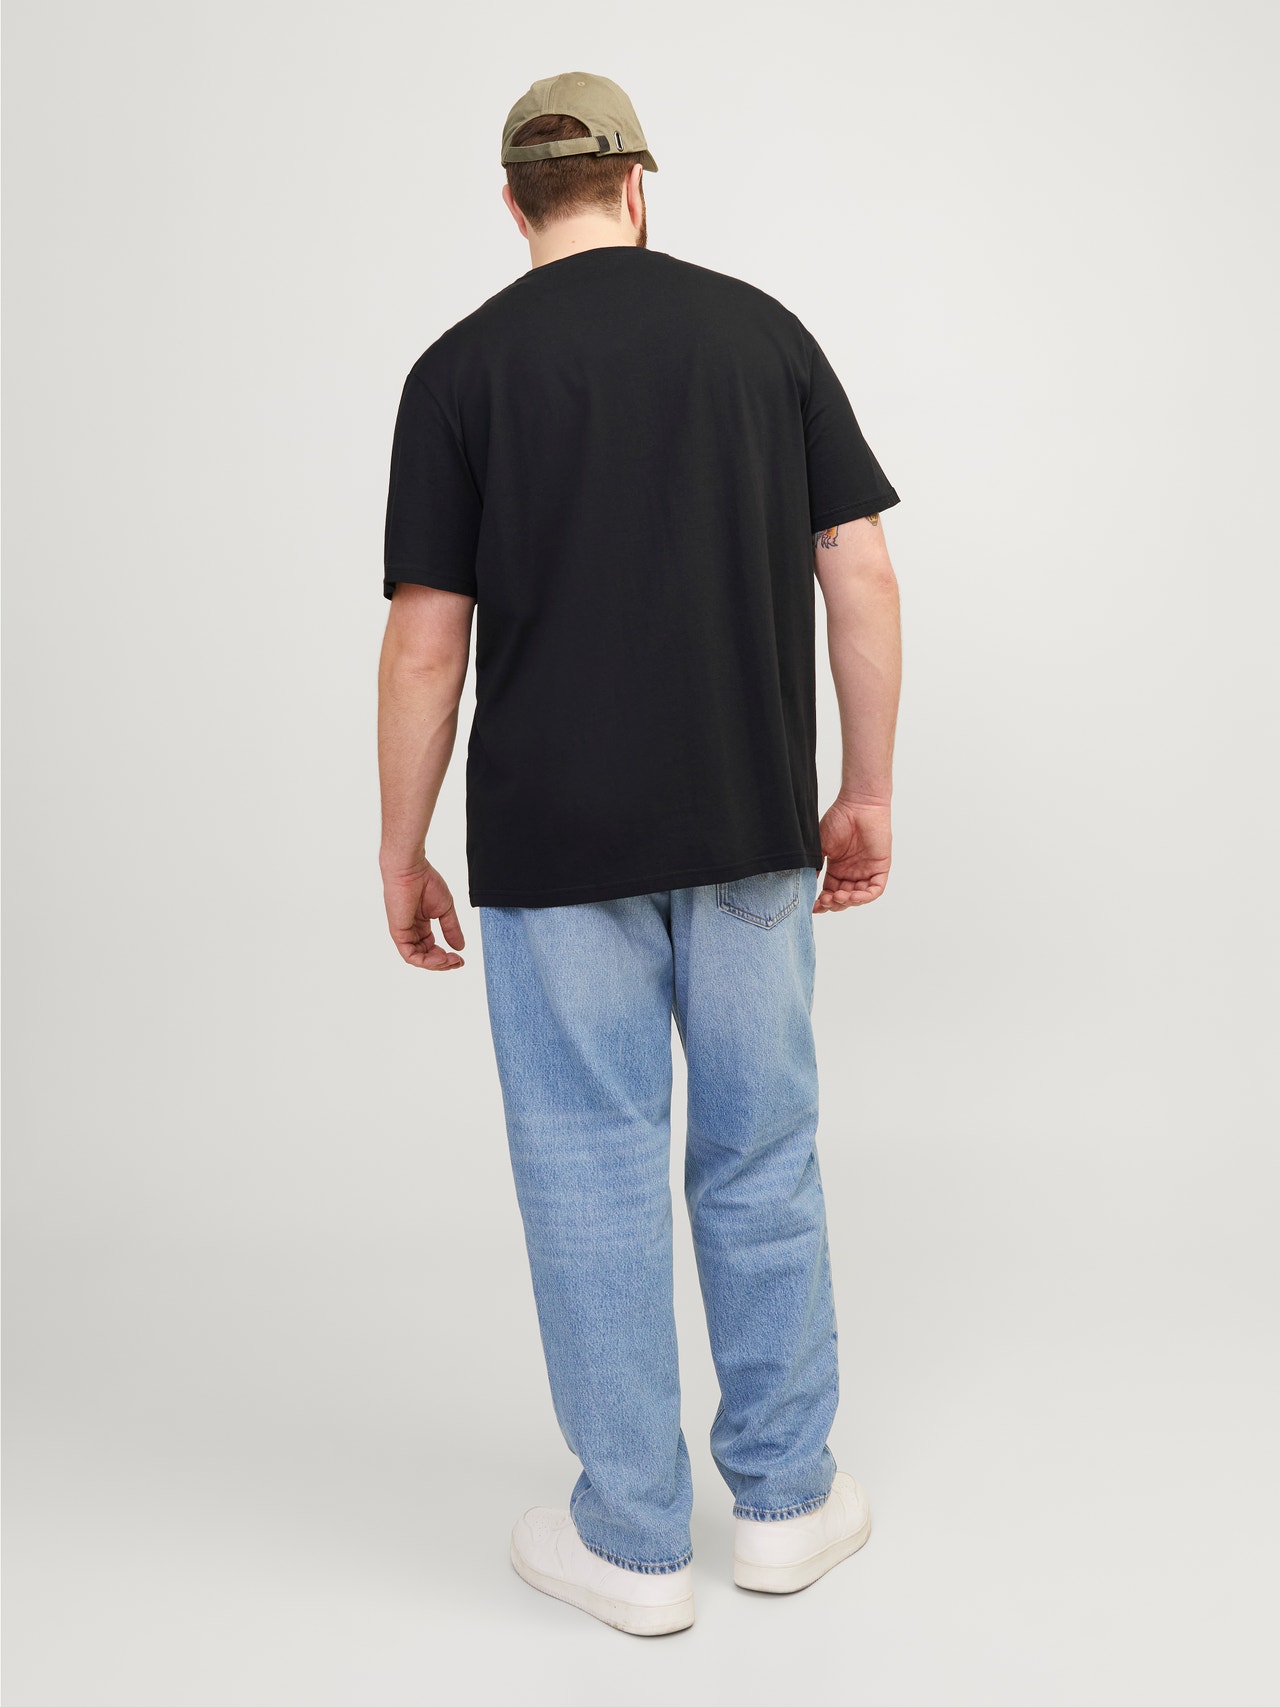 Jack & Jones Plus Size Bedrukt T-shirt -Black - 12257364